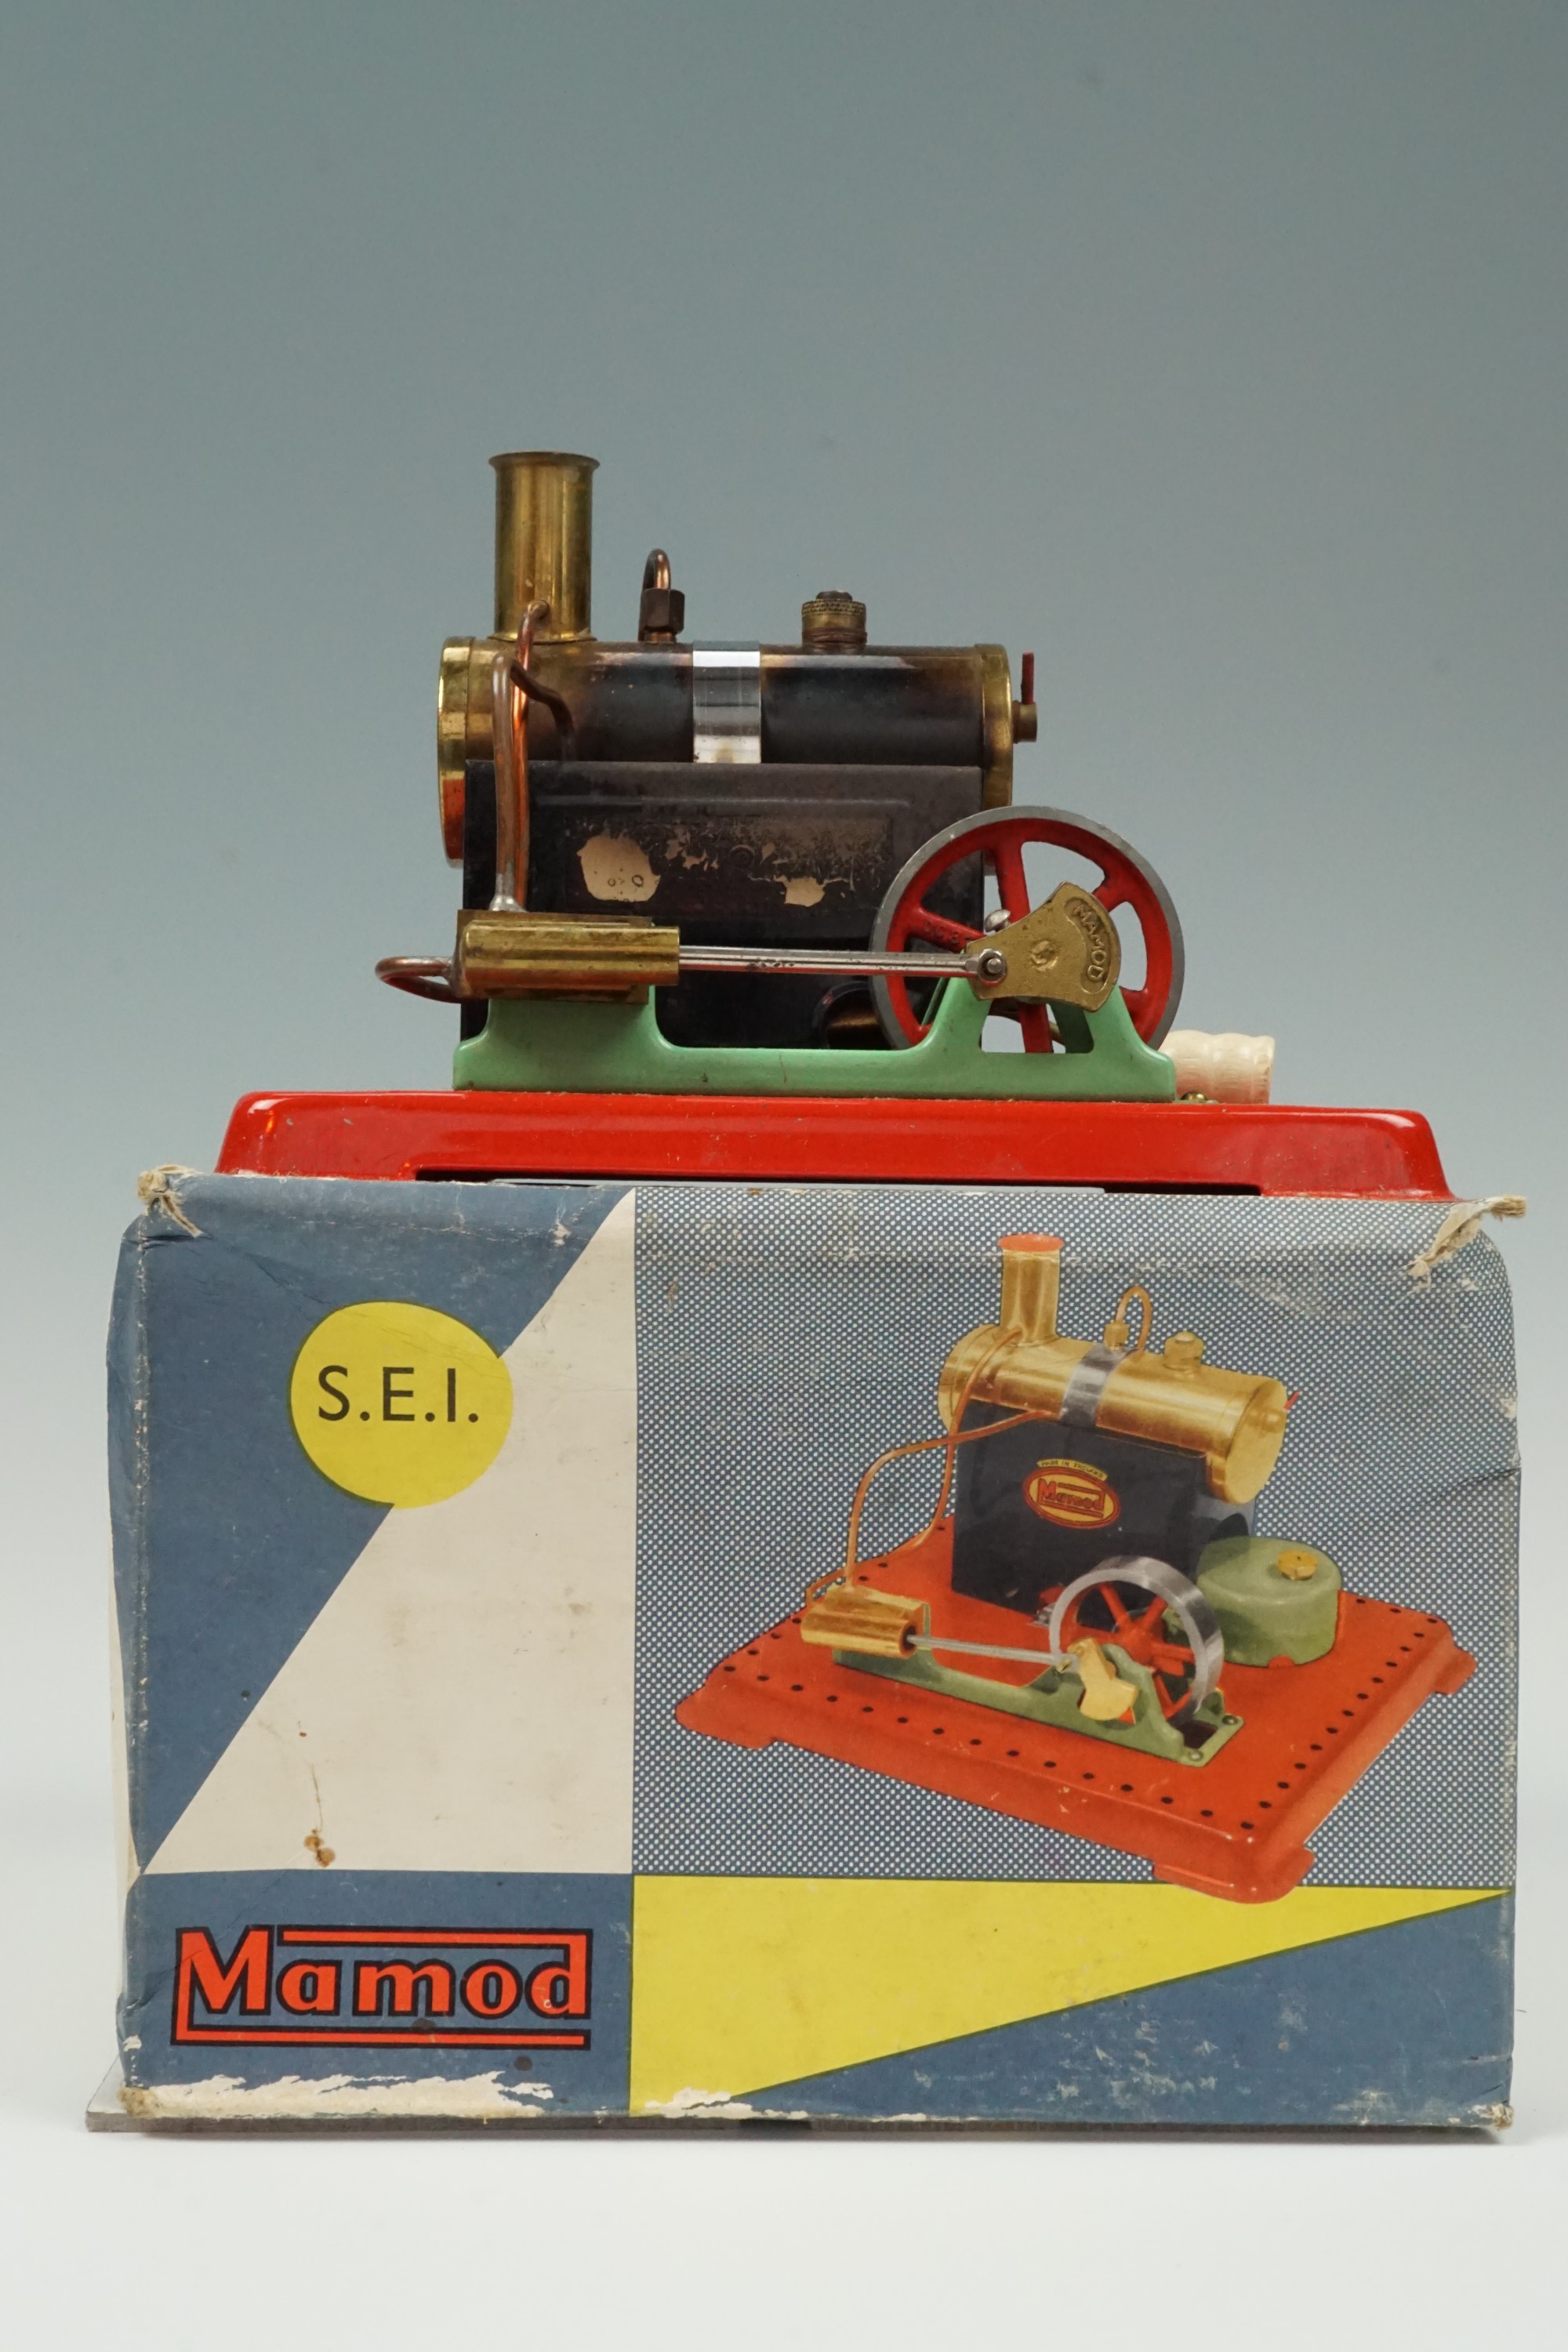 A Mamod model SE1 stationary steam engine, boxed, circa 1950s